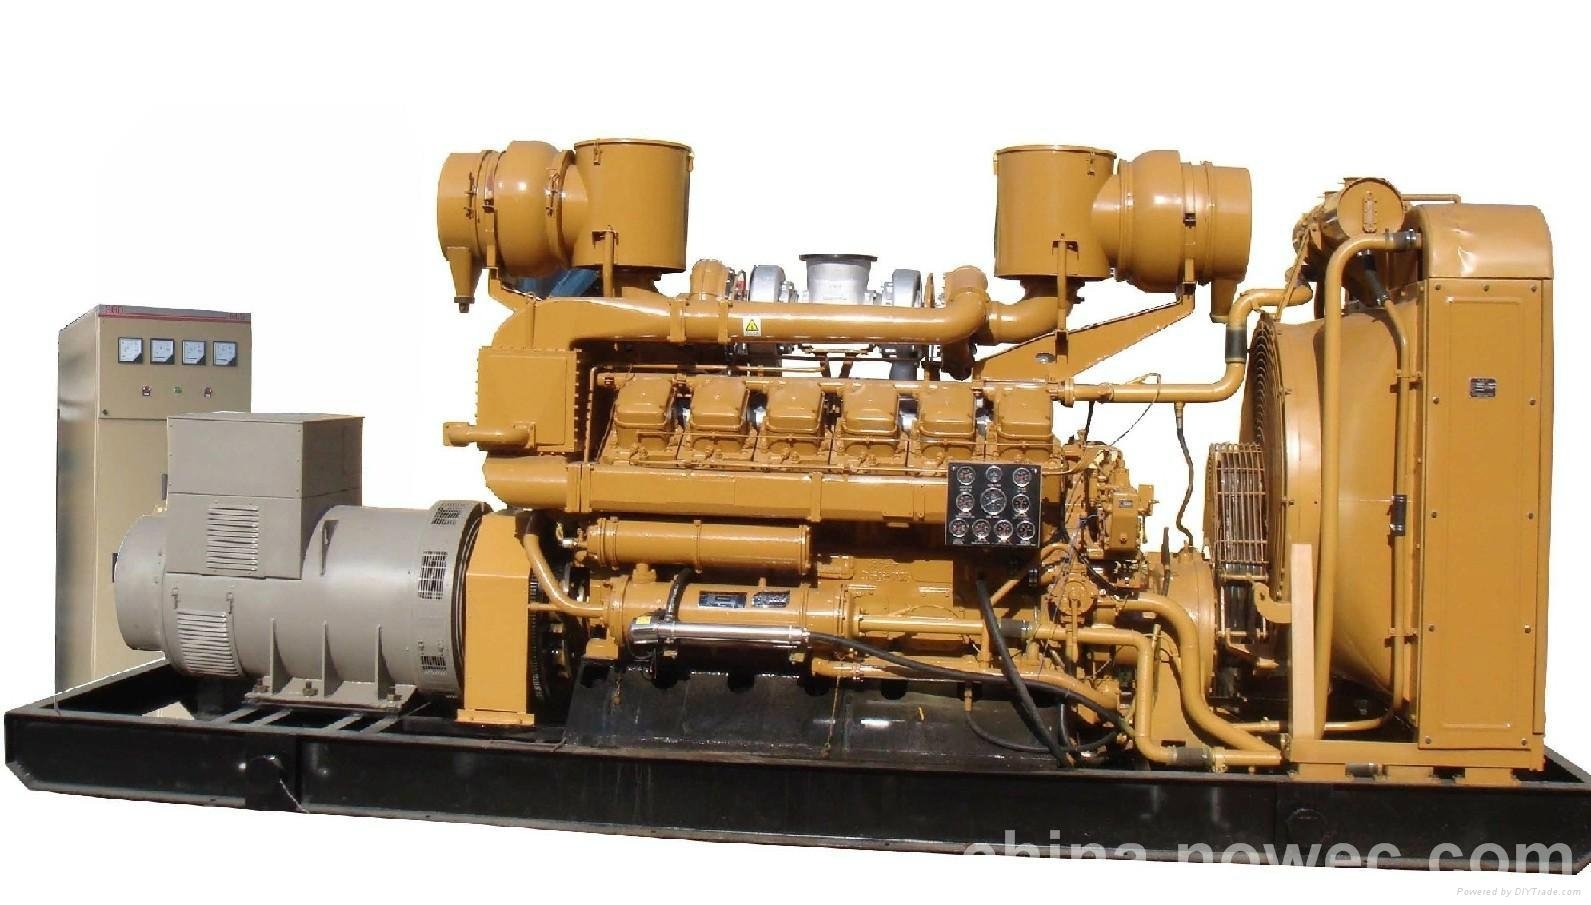 190 series generator set